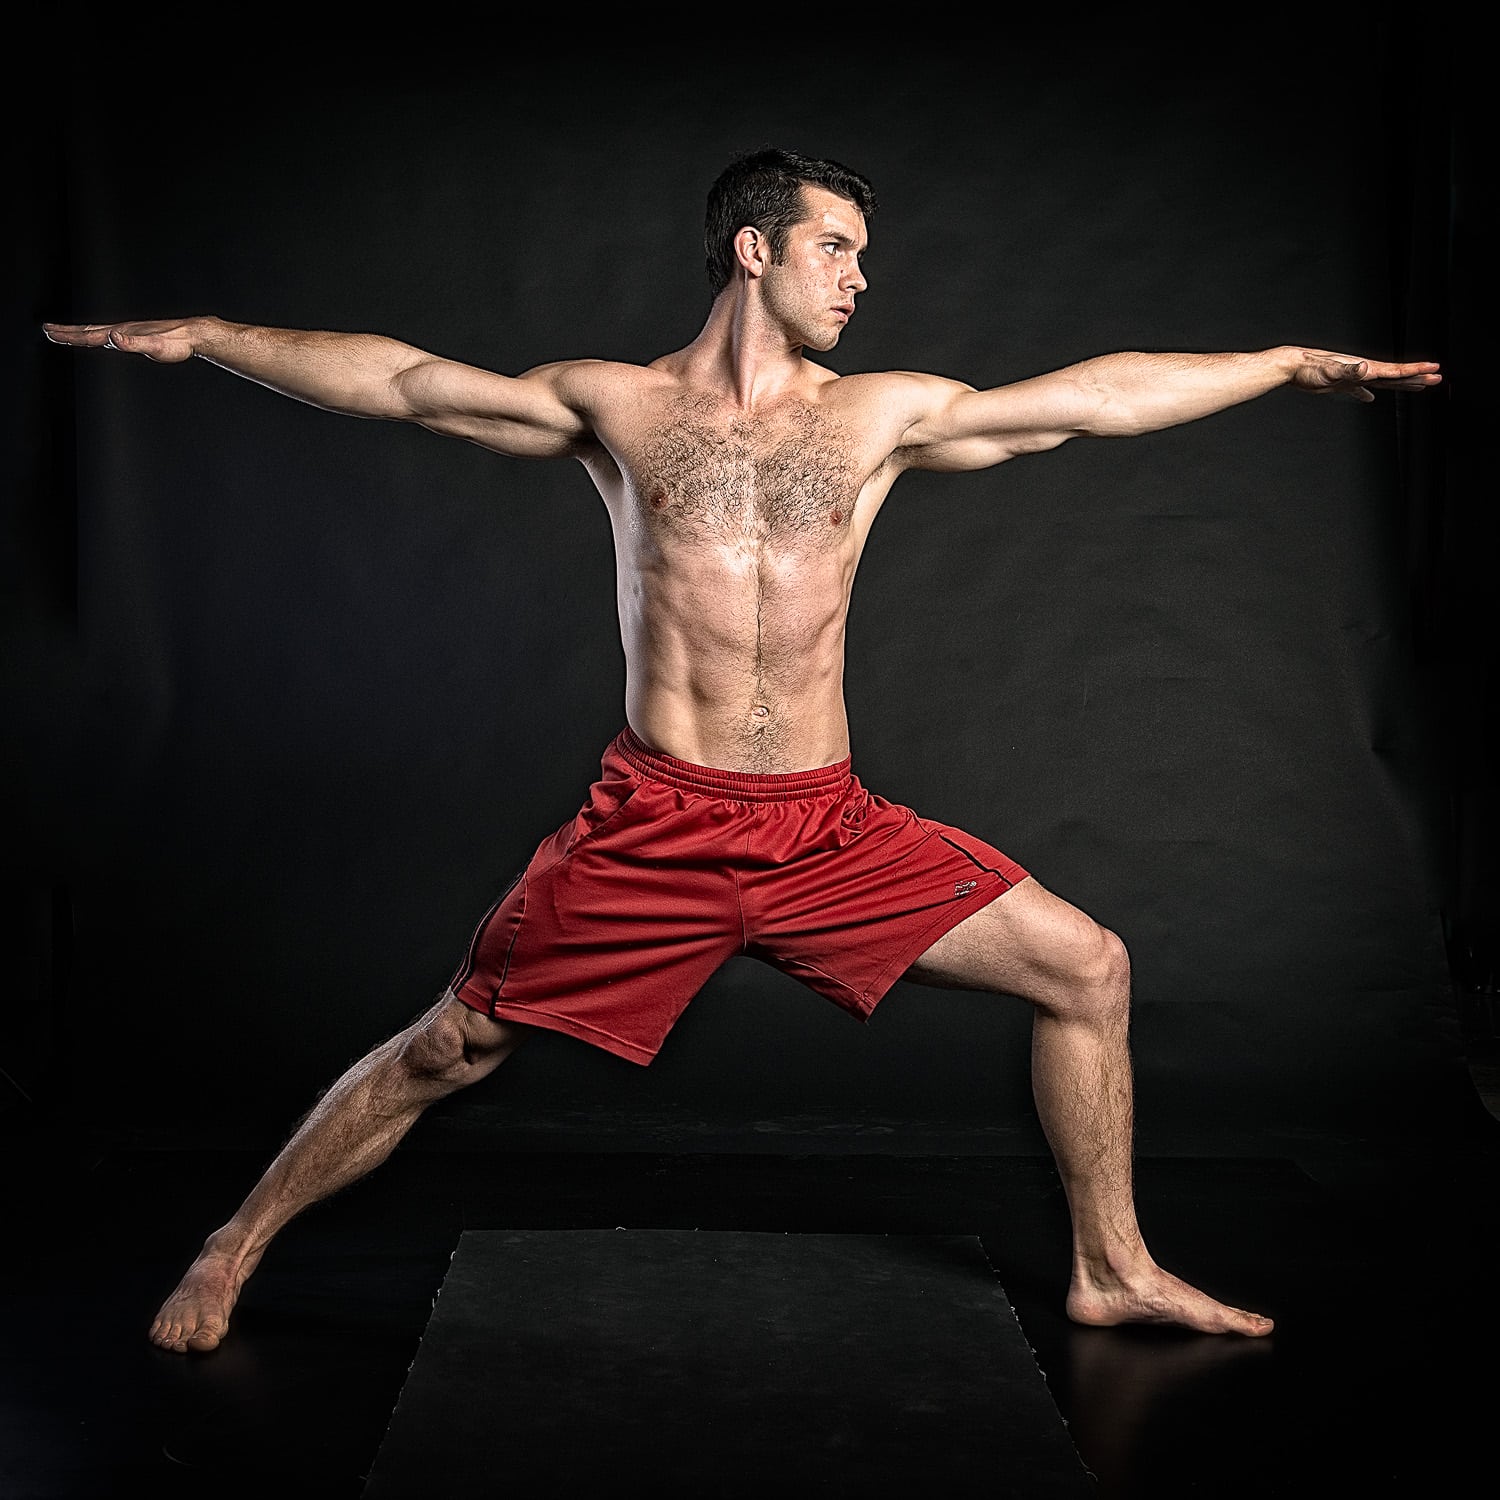 Man Flow Yoga for Beginners - Man Flow Yoga